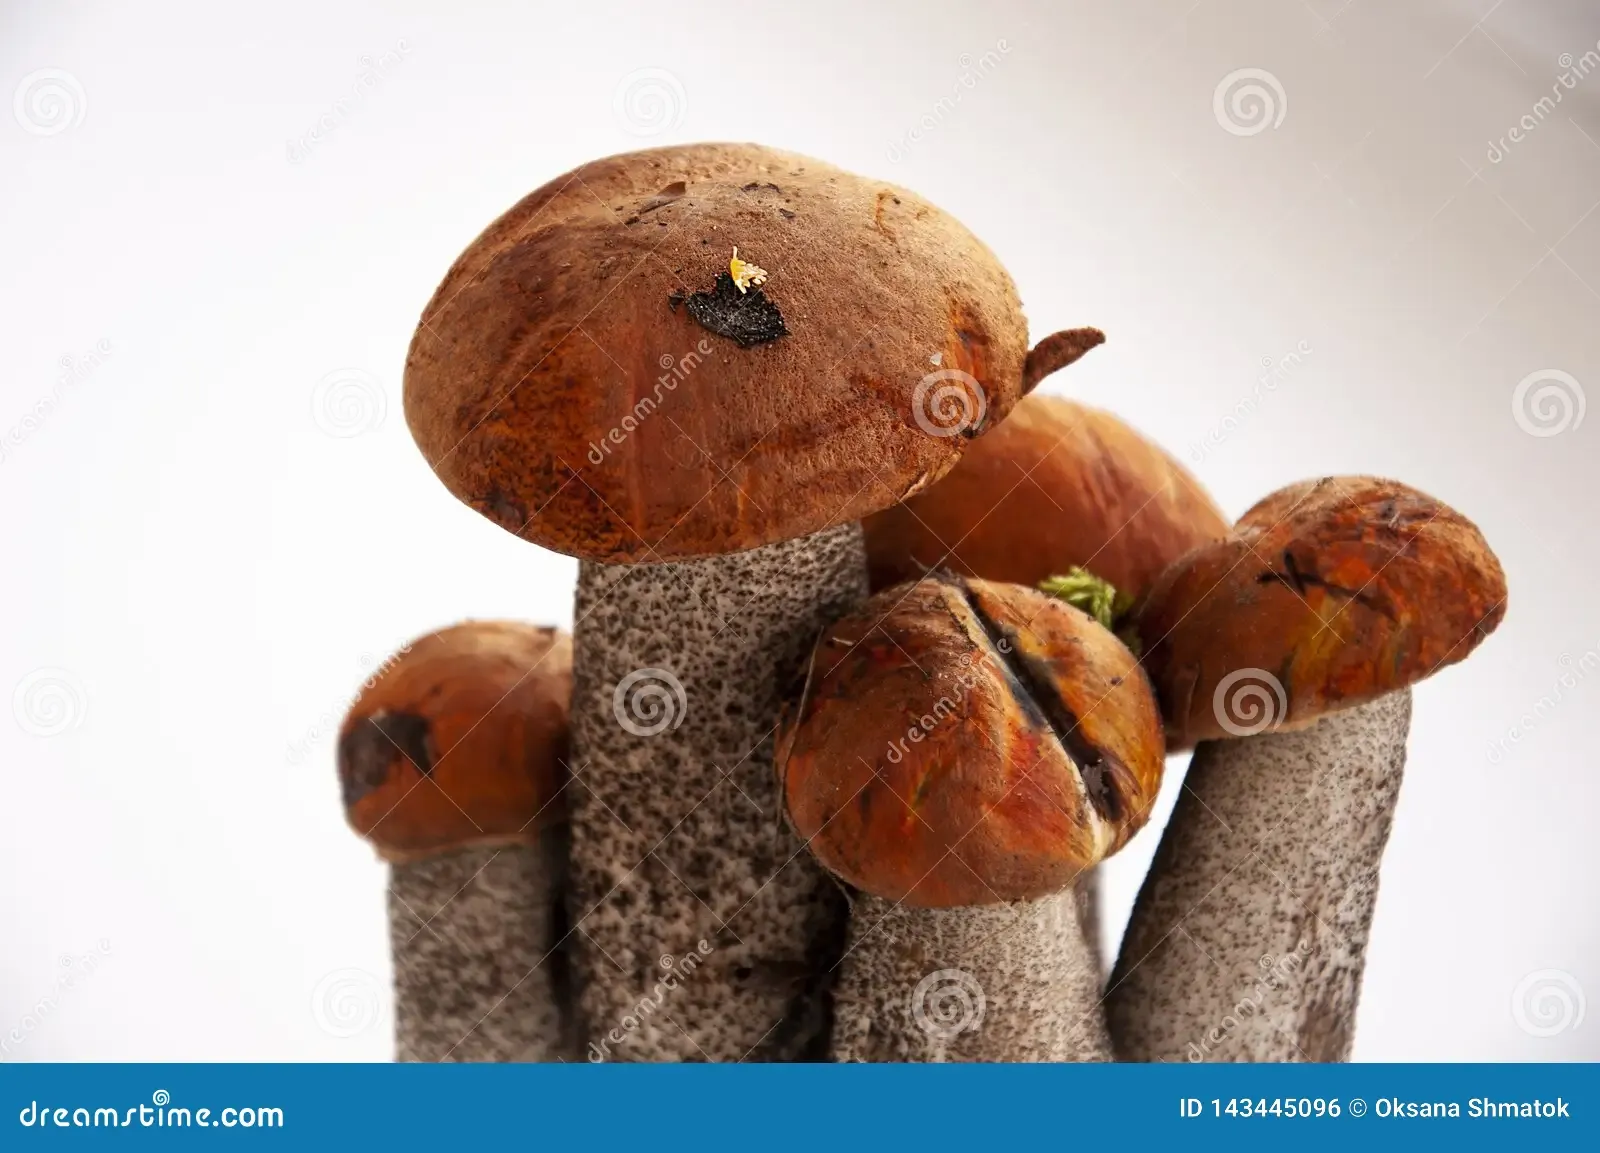 five-big-orange-cap-boletus-mushrooms-white-background-143445096.jpg